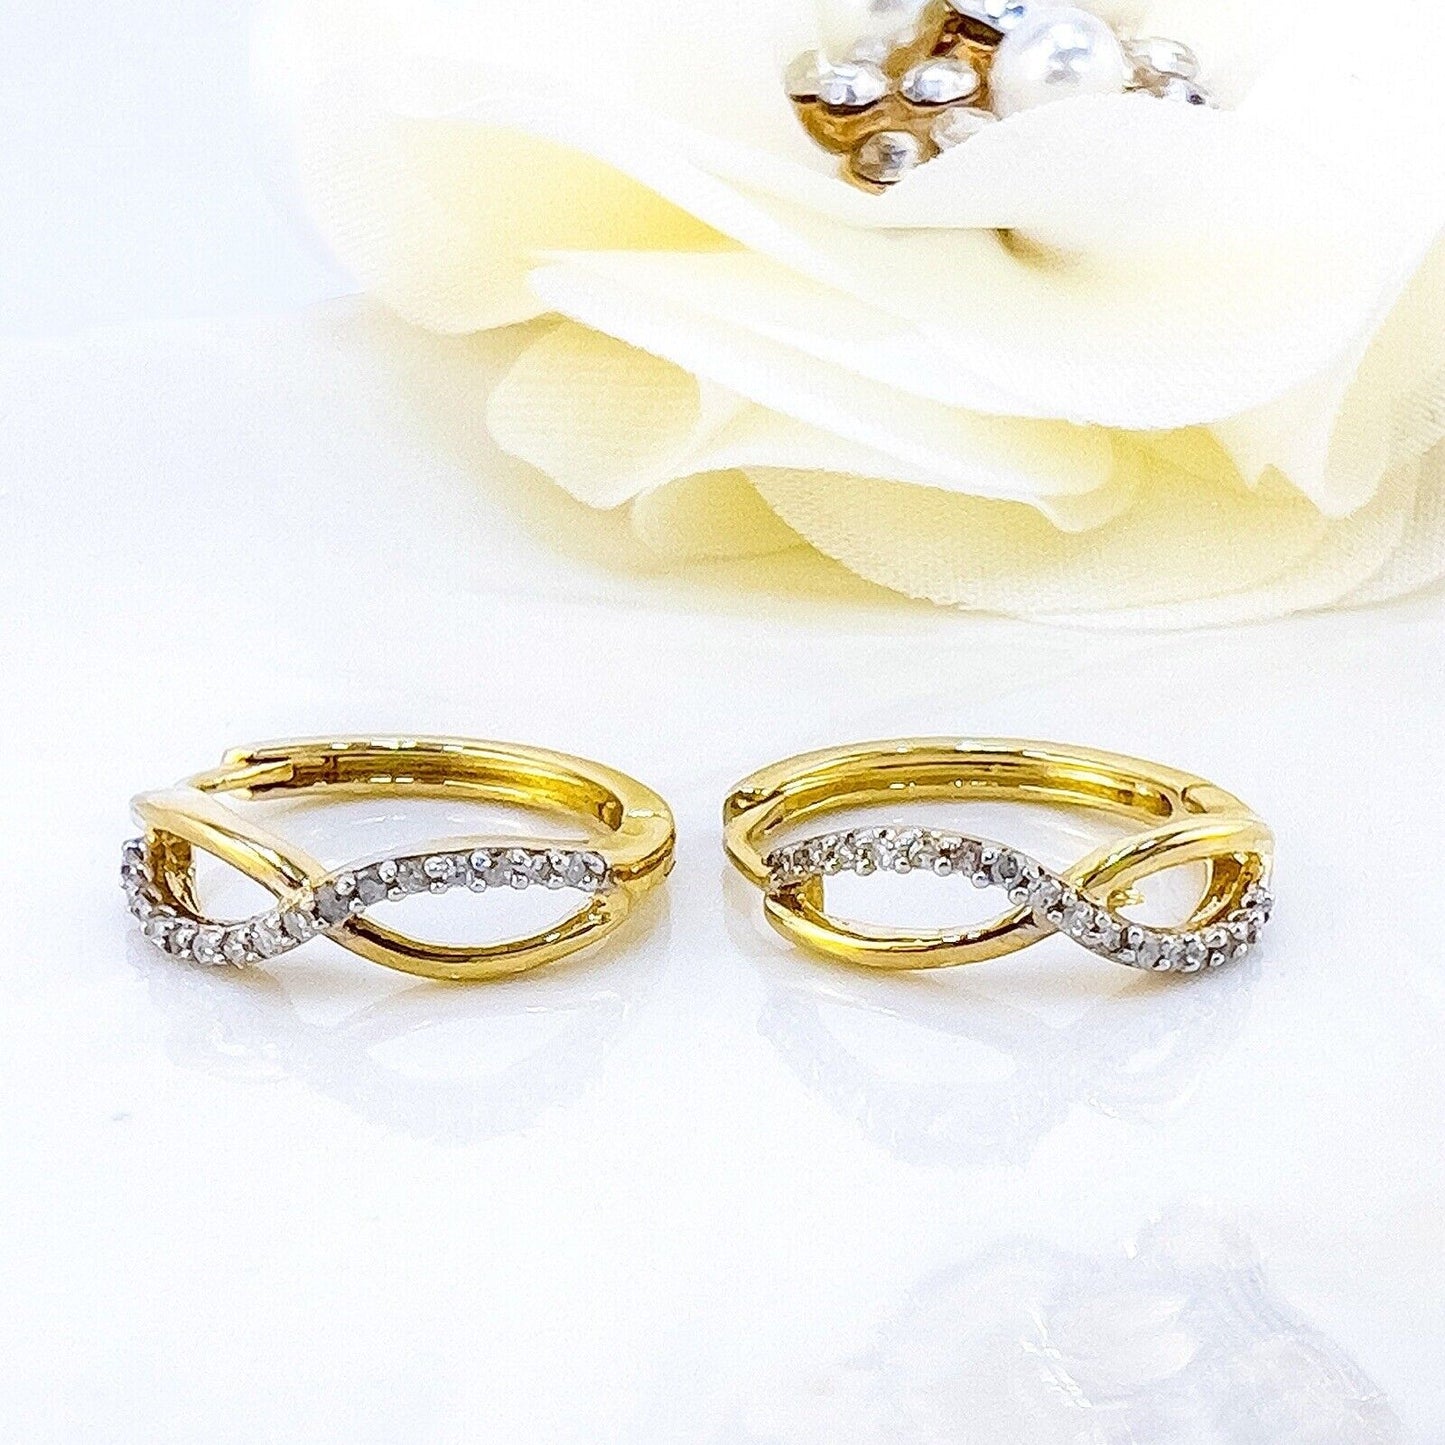 Solid 10k Yellow Gold Genuine Diamond Infinity-Design Hoop Earrings, New